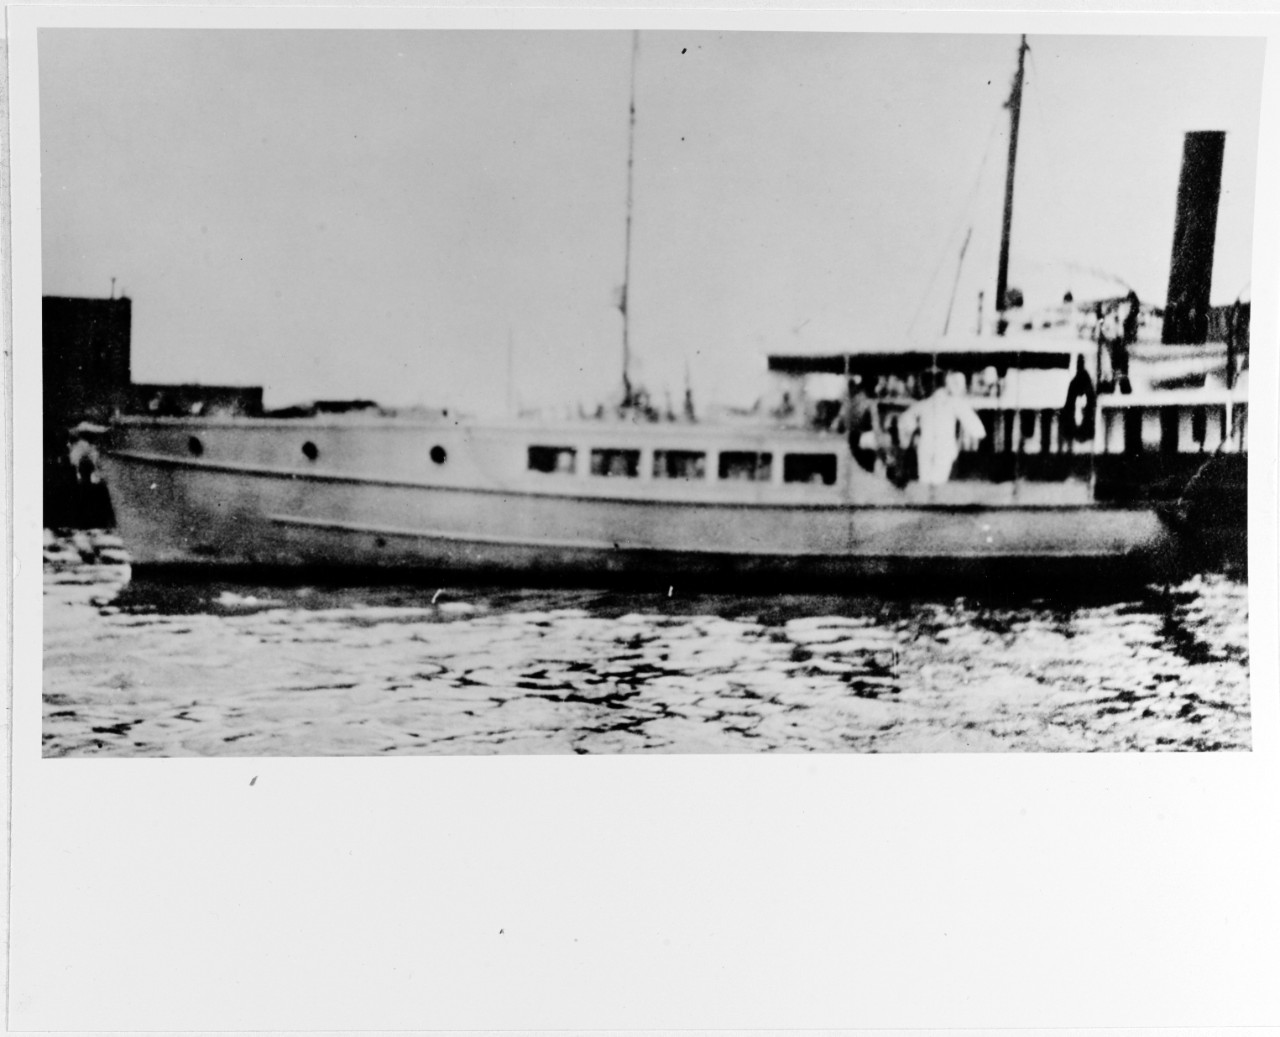 TOCSAM (S.P. Boat)